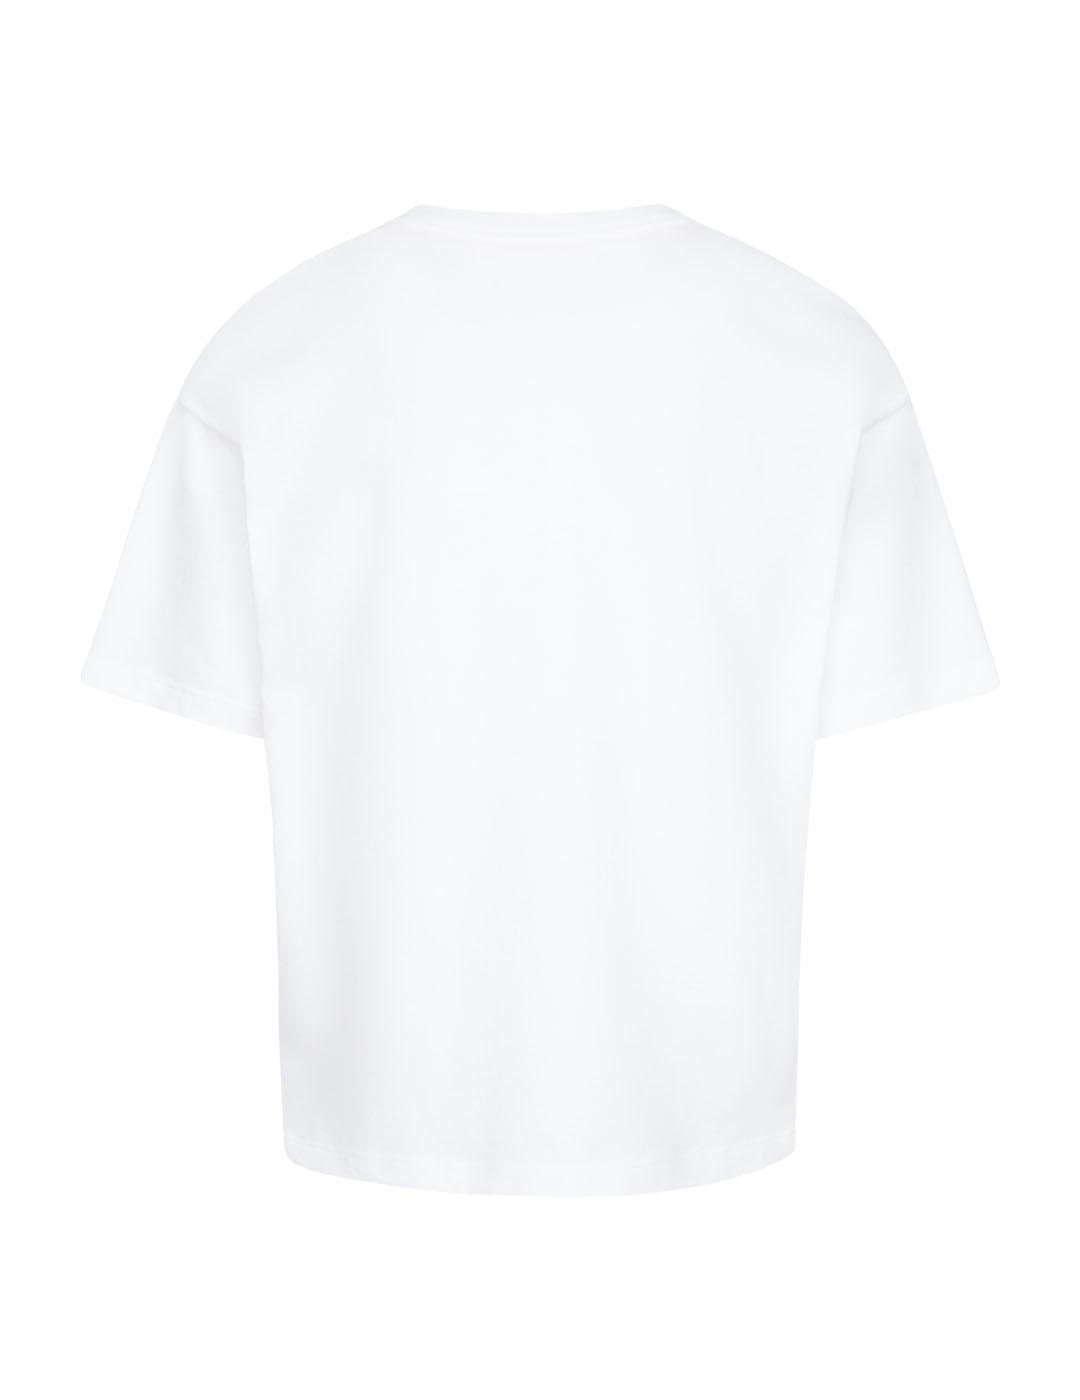 Camiseta Niña Jordan Focus Blanca